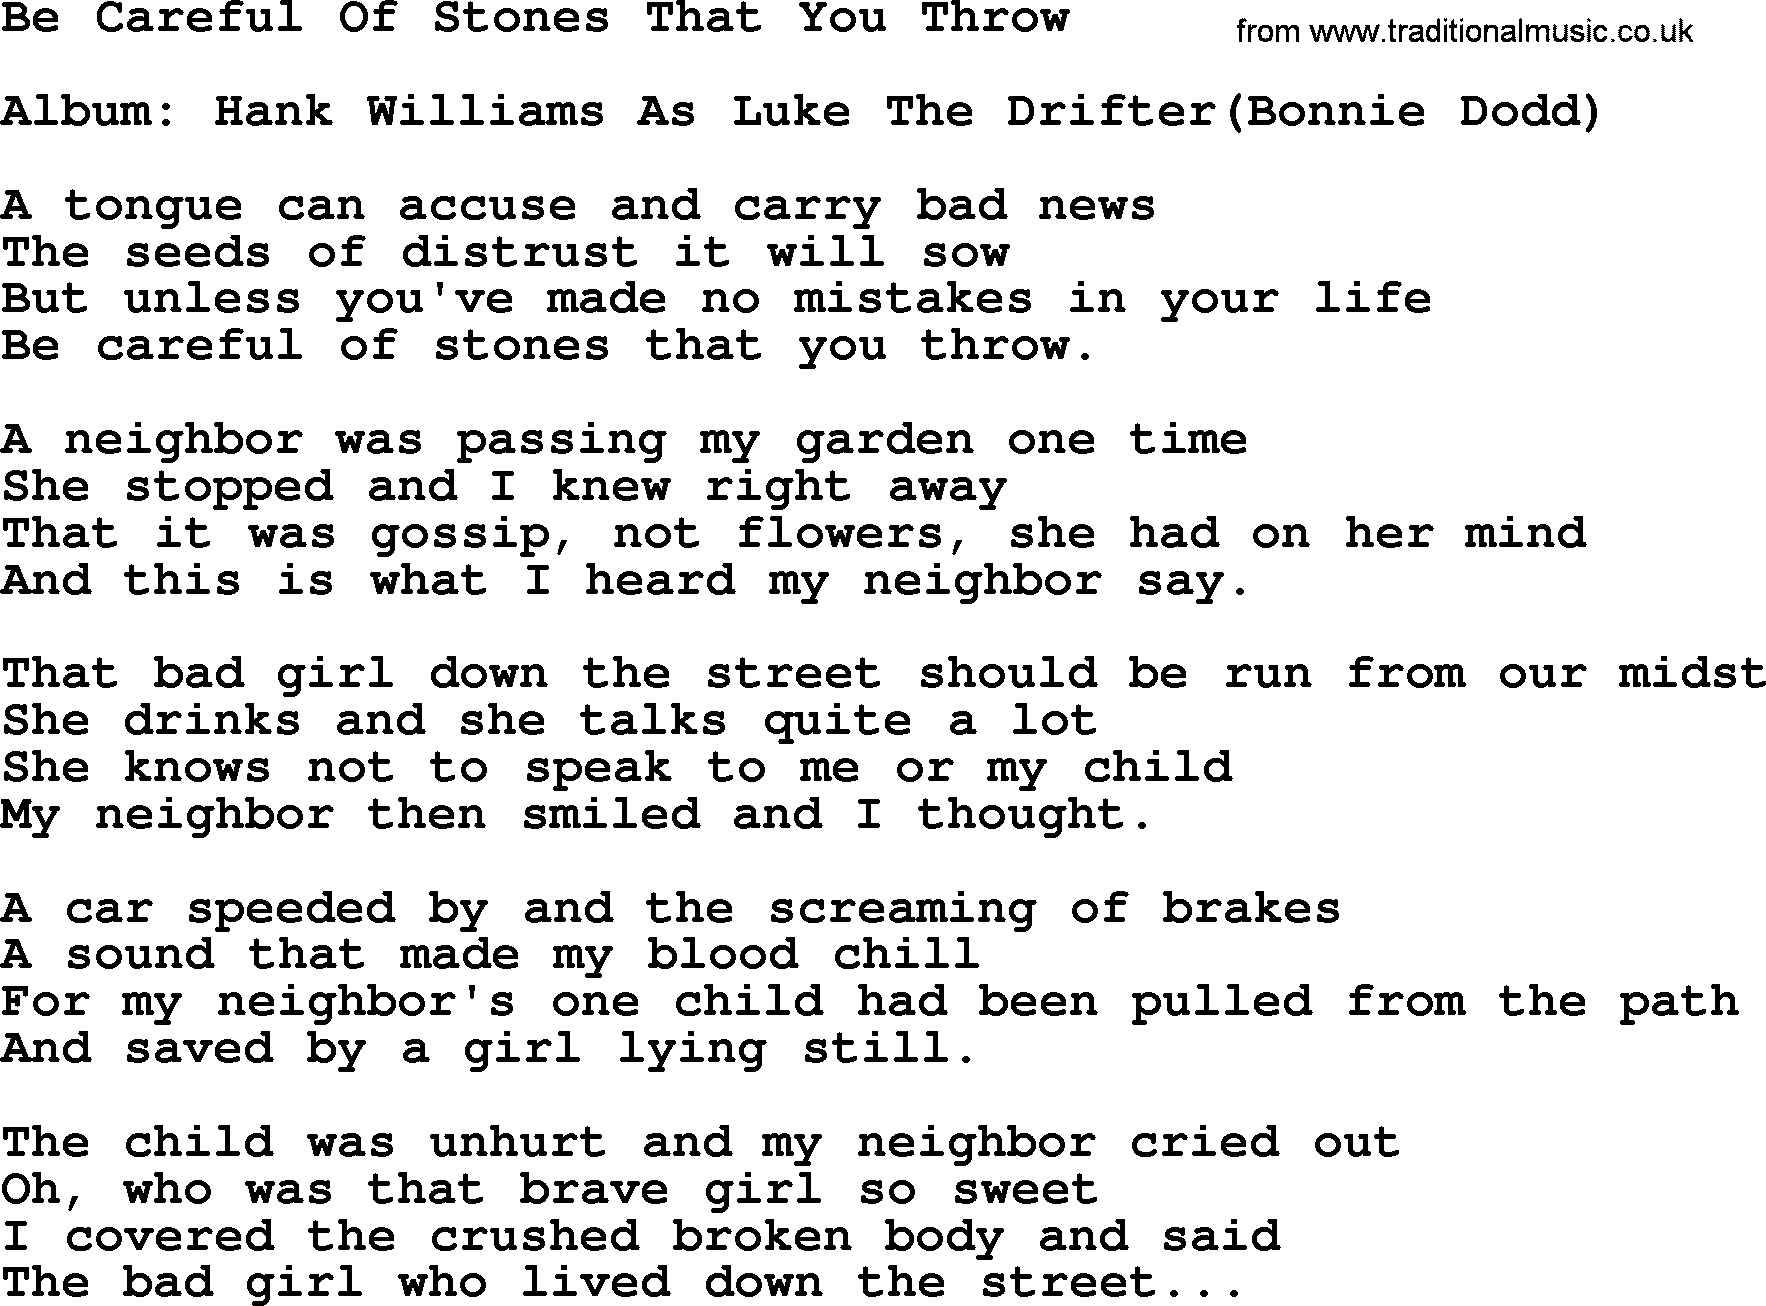 Hank Williams song Be Careful Of Stones That You Throw, lyrics